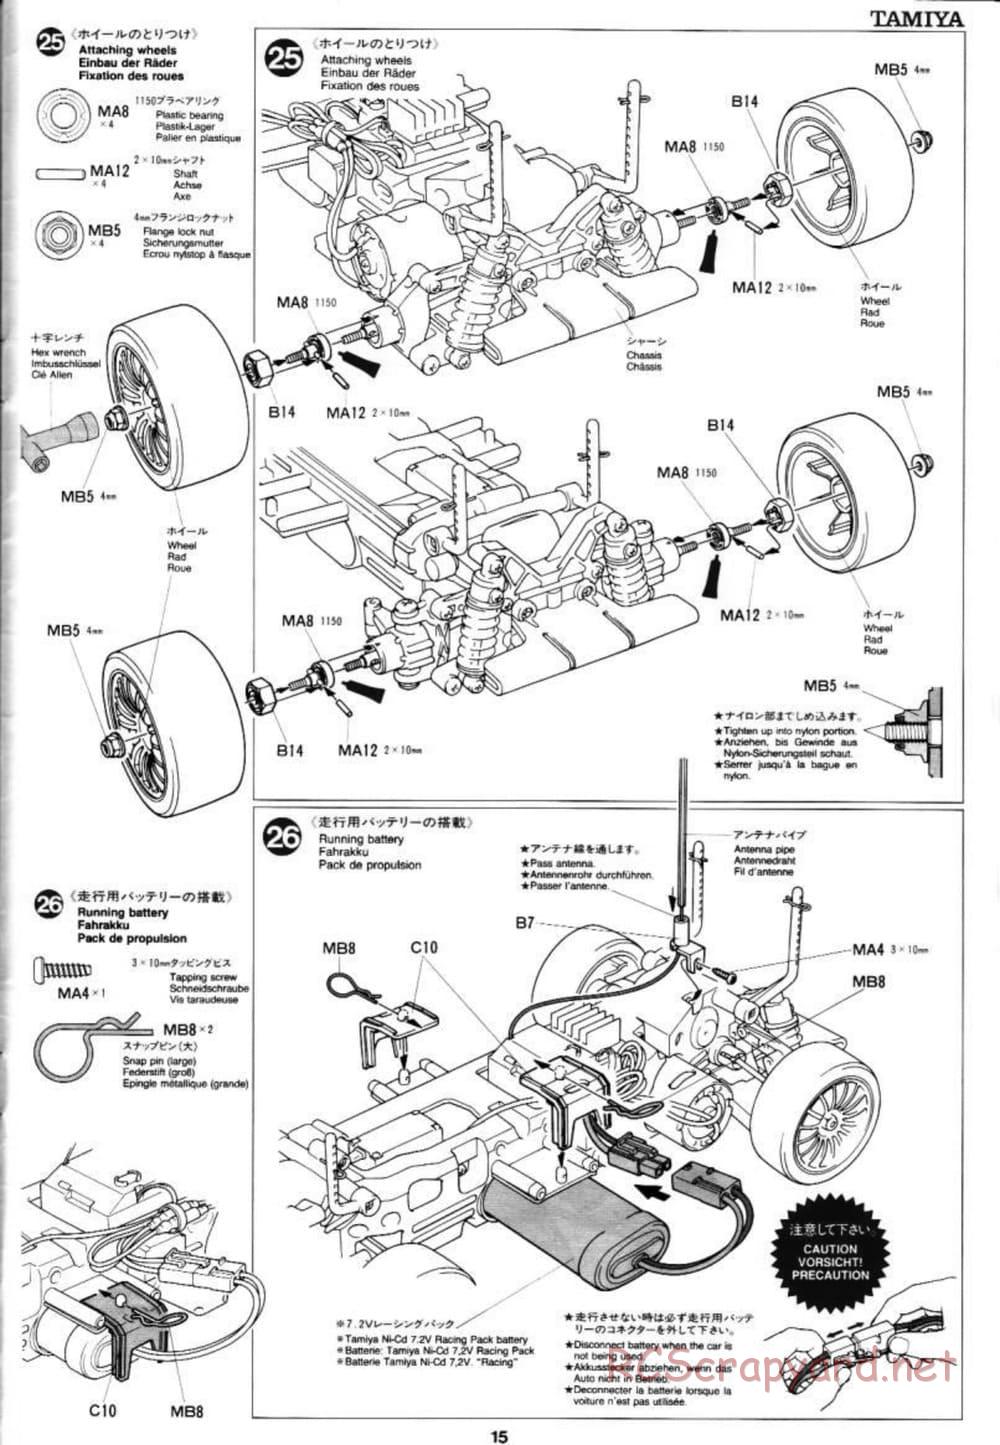 Tamiya - Peugeot 406 ST - TL-01 Chassis - Manual - Page 15